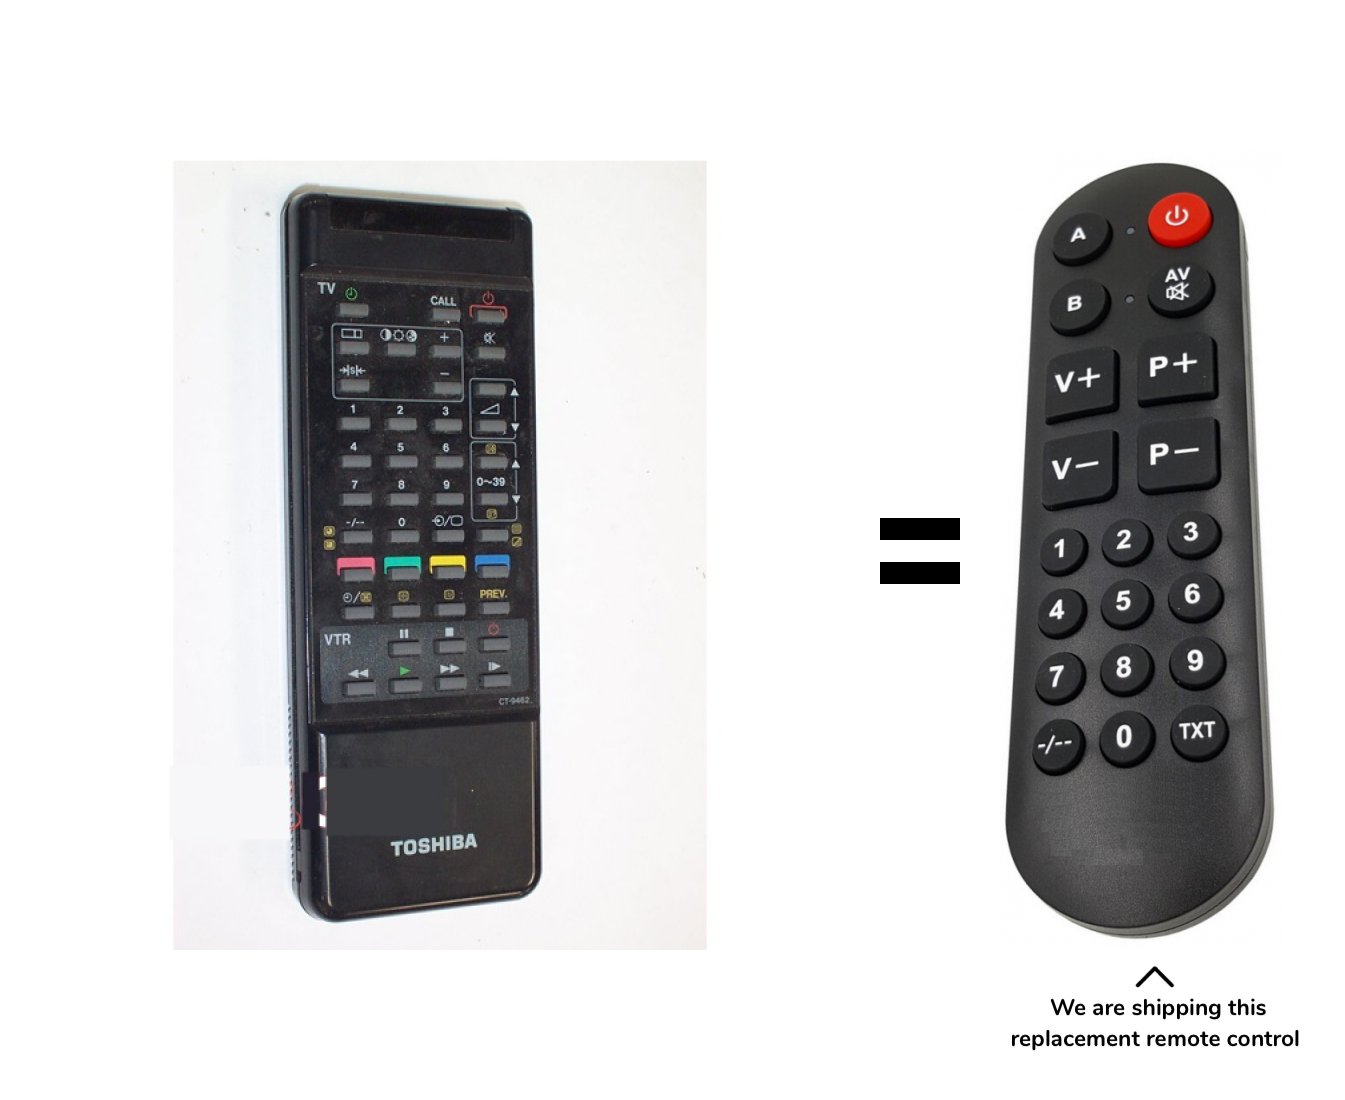 Toshiba CT-9574 remote control for seniors